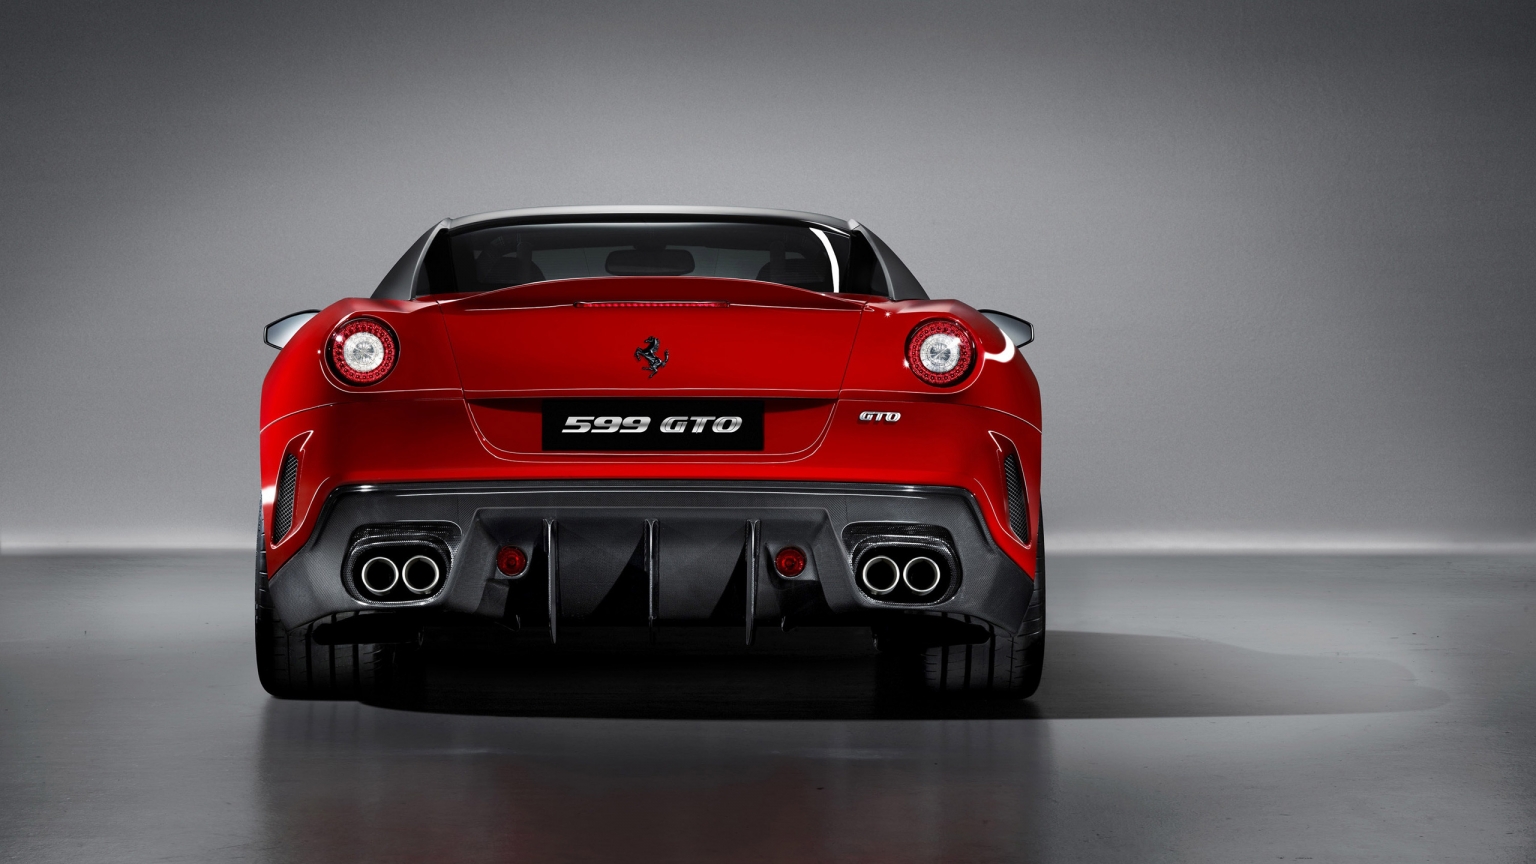 Ferrari 599 GTO Rear for 1536 x 864 HDTV resolution